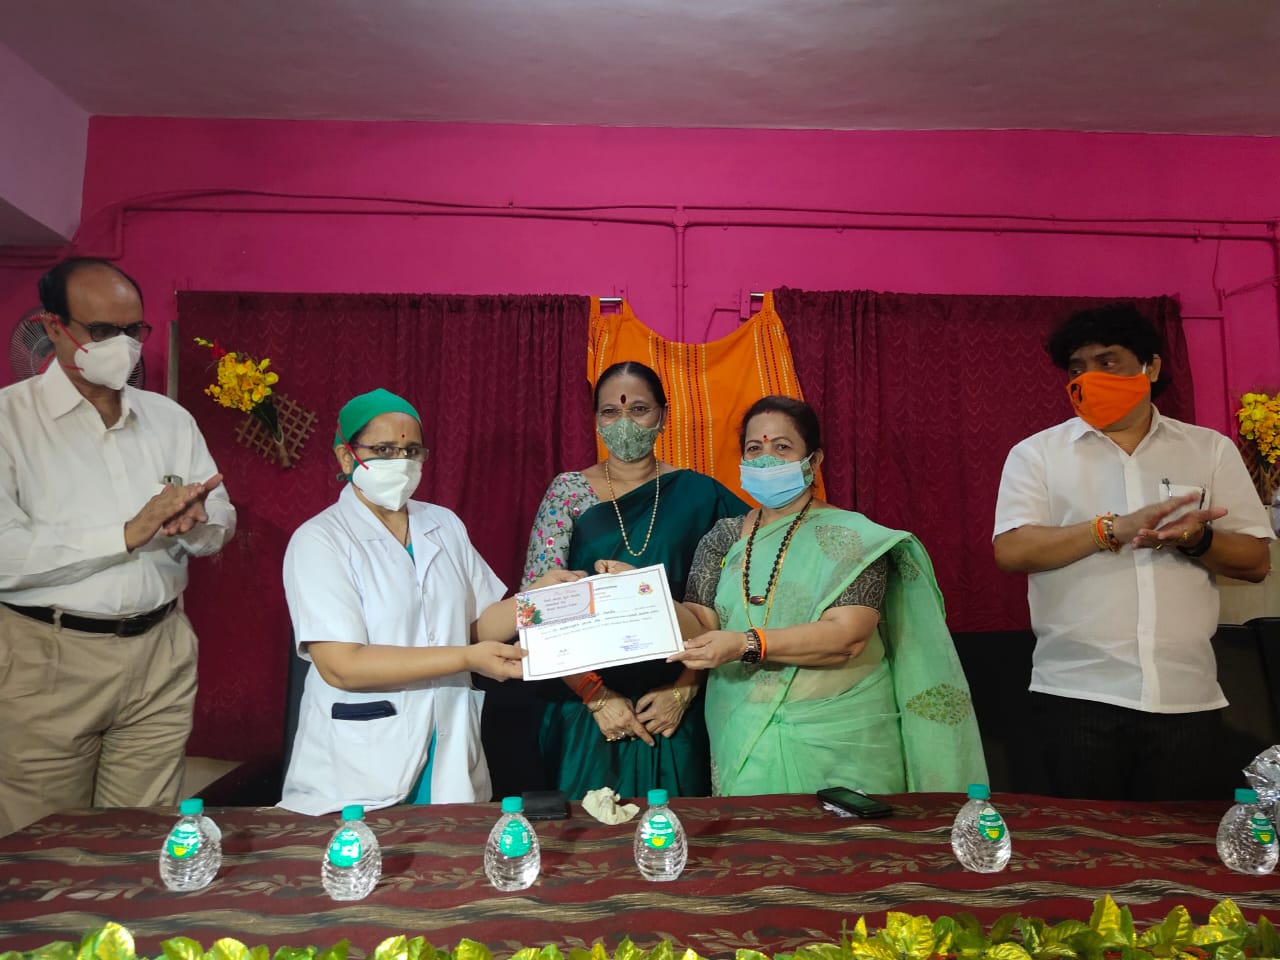 Lion's share of continuous service of nurses in "Mumbai Model" - Mayor Kishori Pednekar